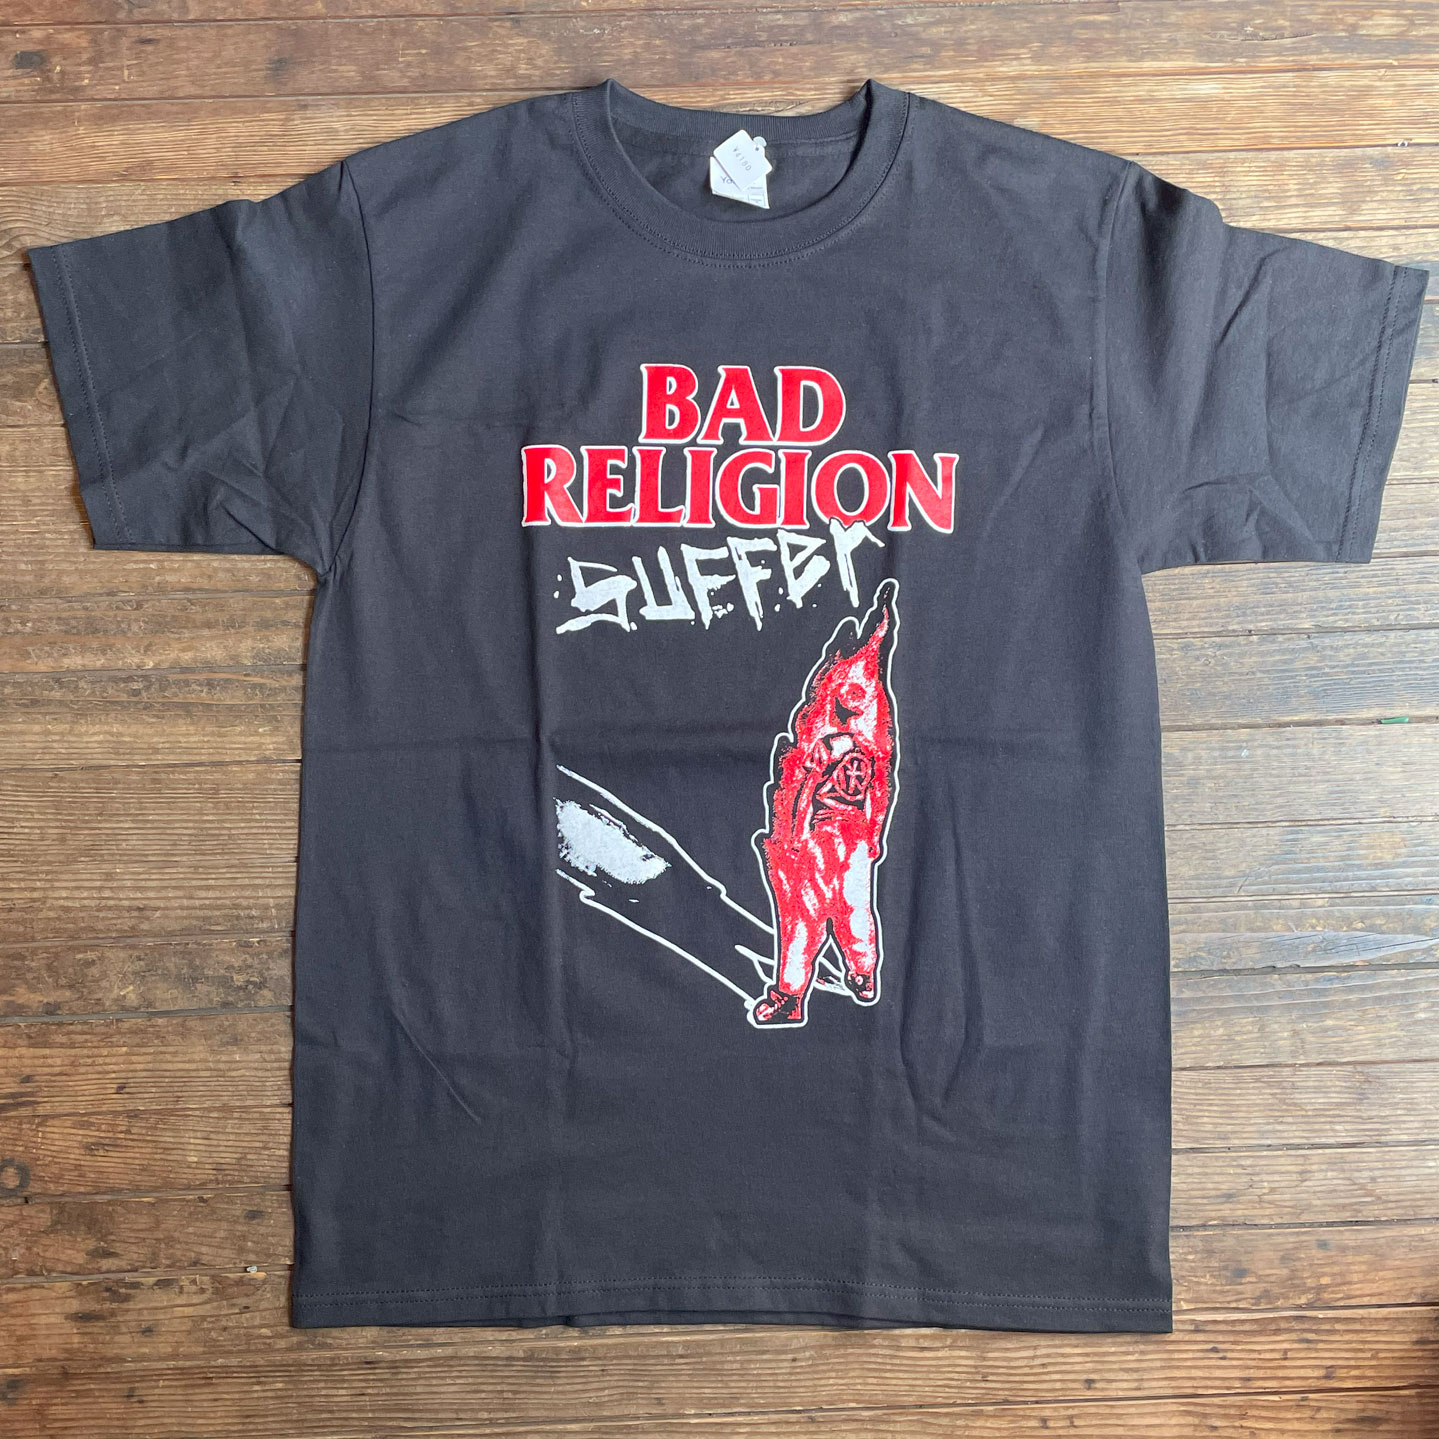 BAD RELIGION Tシャツ SUFFER